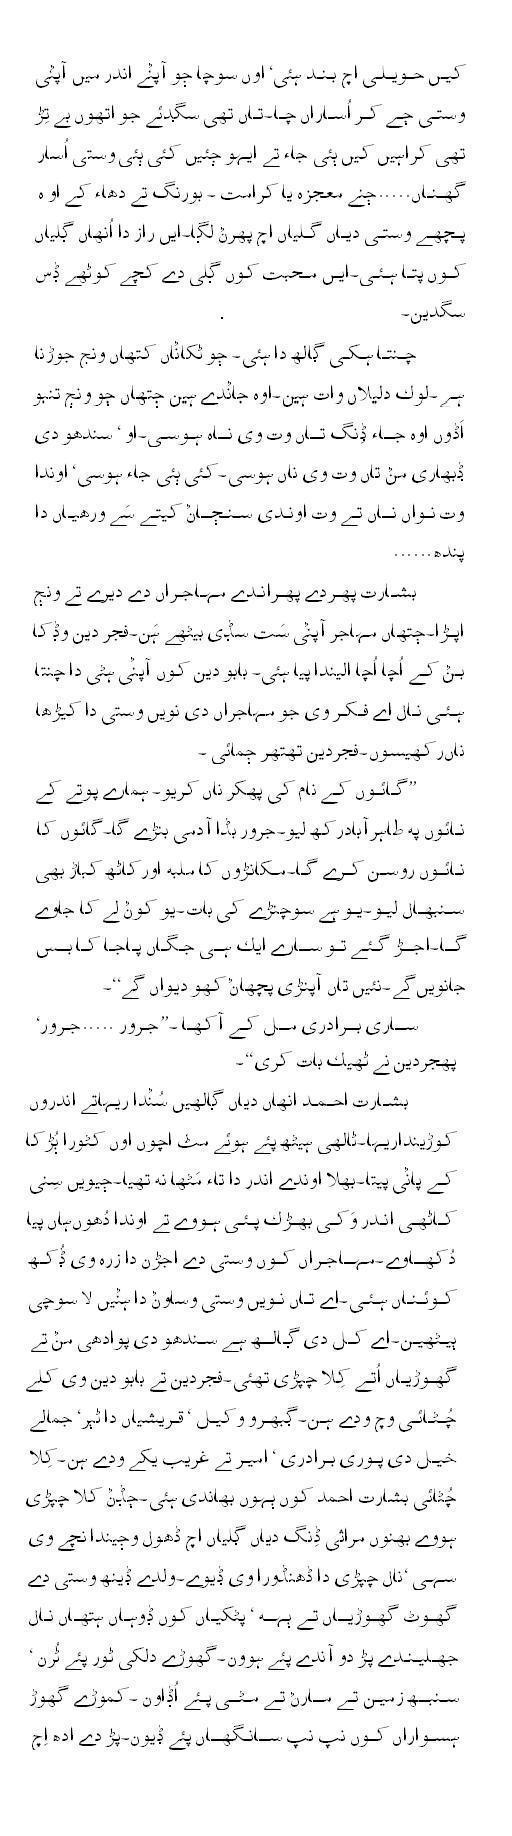 Dding (Hamid Siraj/ Translator Saeed Akhtar Zia) - Part 3